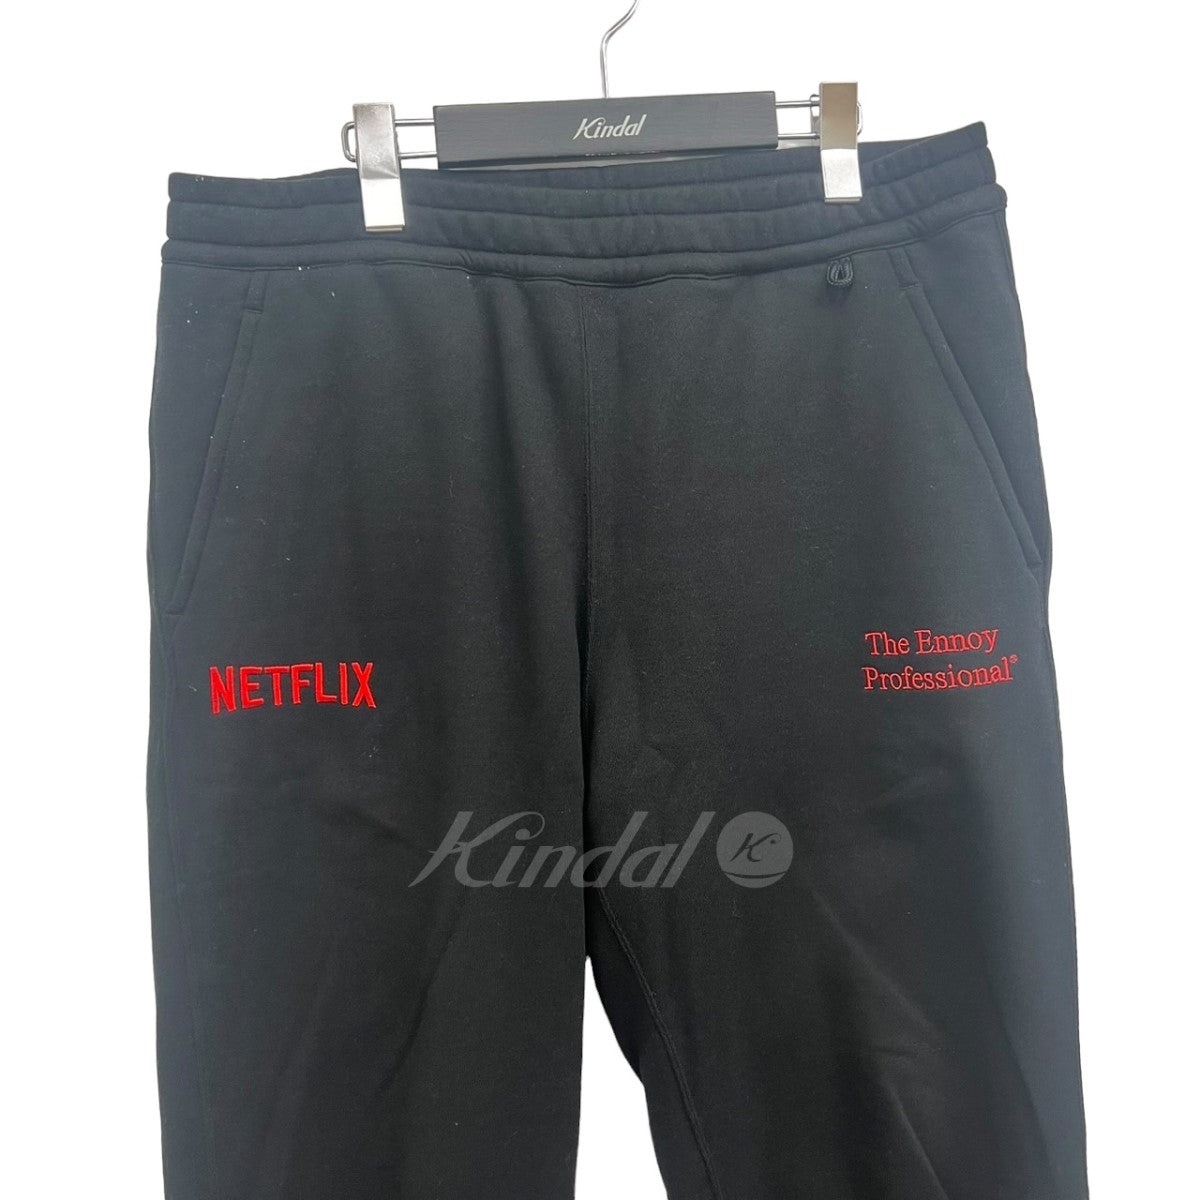 Netflix ENNOY パンツのみ【ステッカー付き】未開封品でしょうか